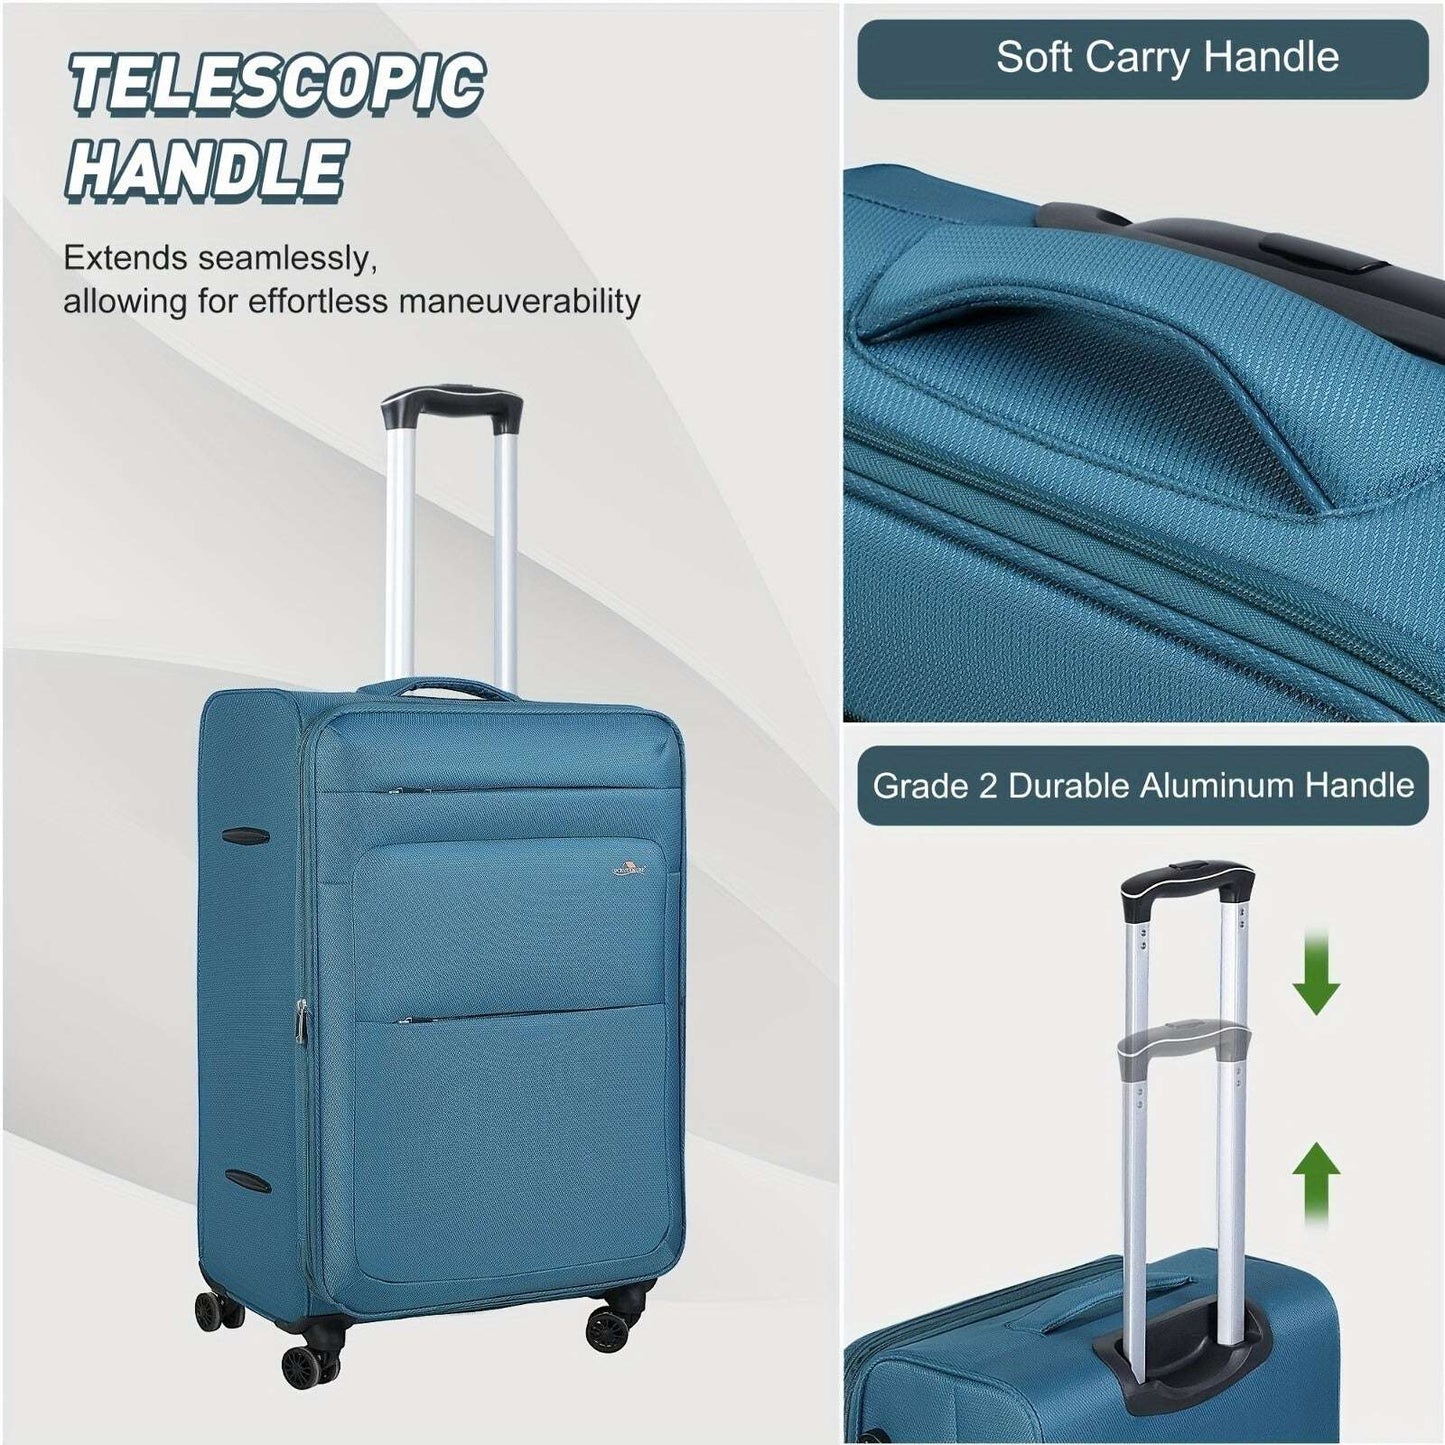 5-Pcs Luggage Set Soft Carry-on Lightweight Travel Suitcase Spinner Wheels 189 Luggage OK•PhotoFineArt OK•PhotoFineArt